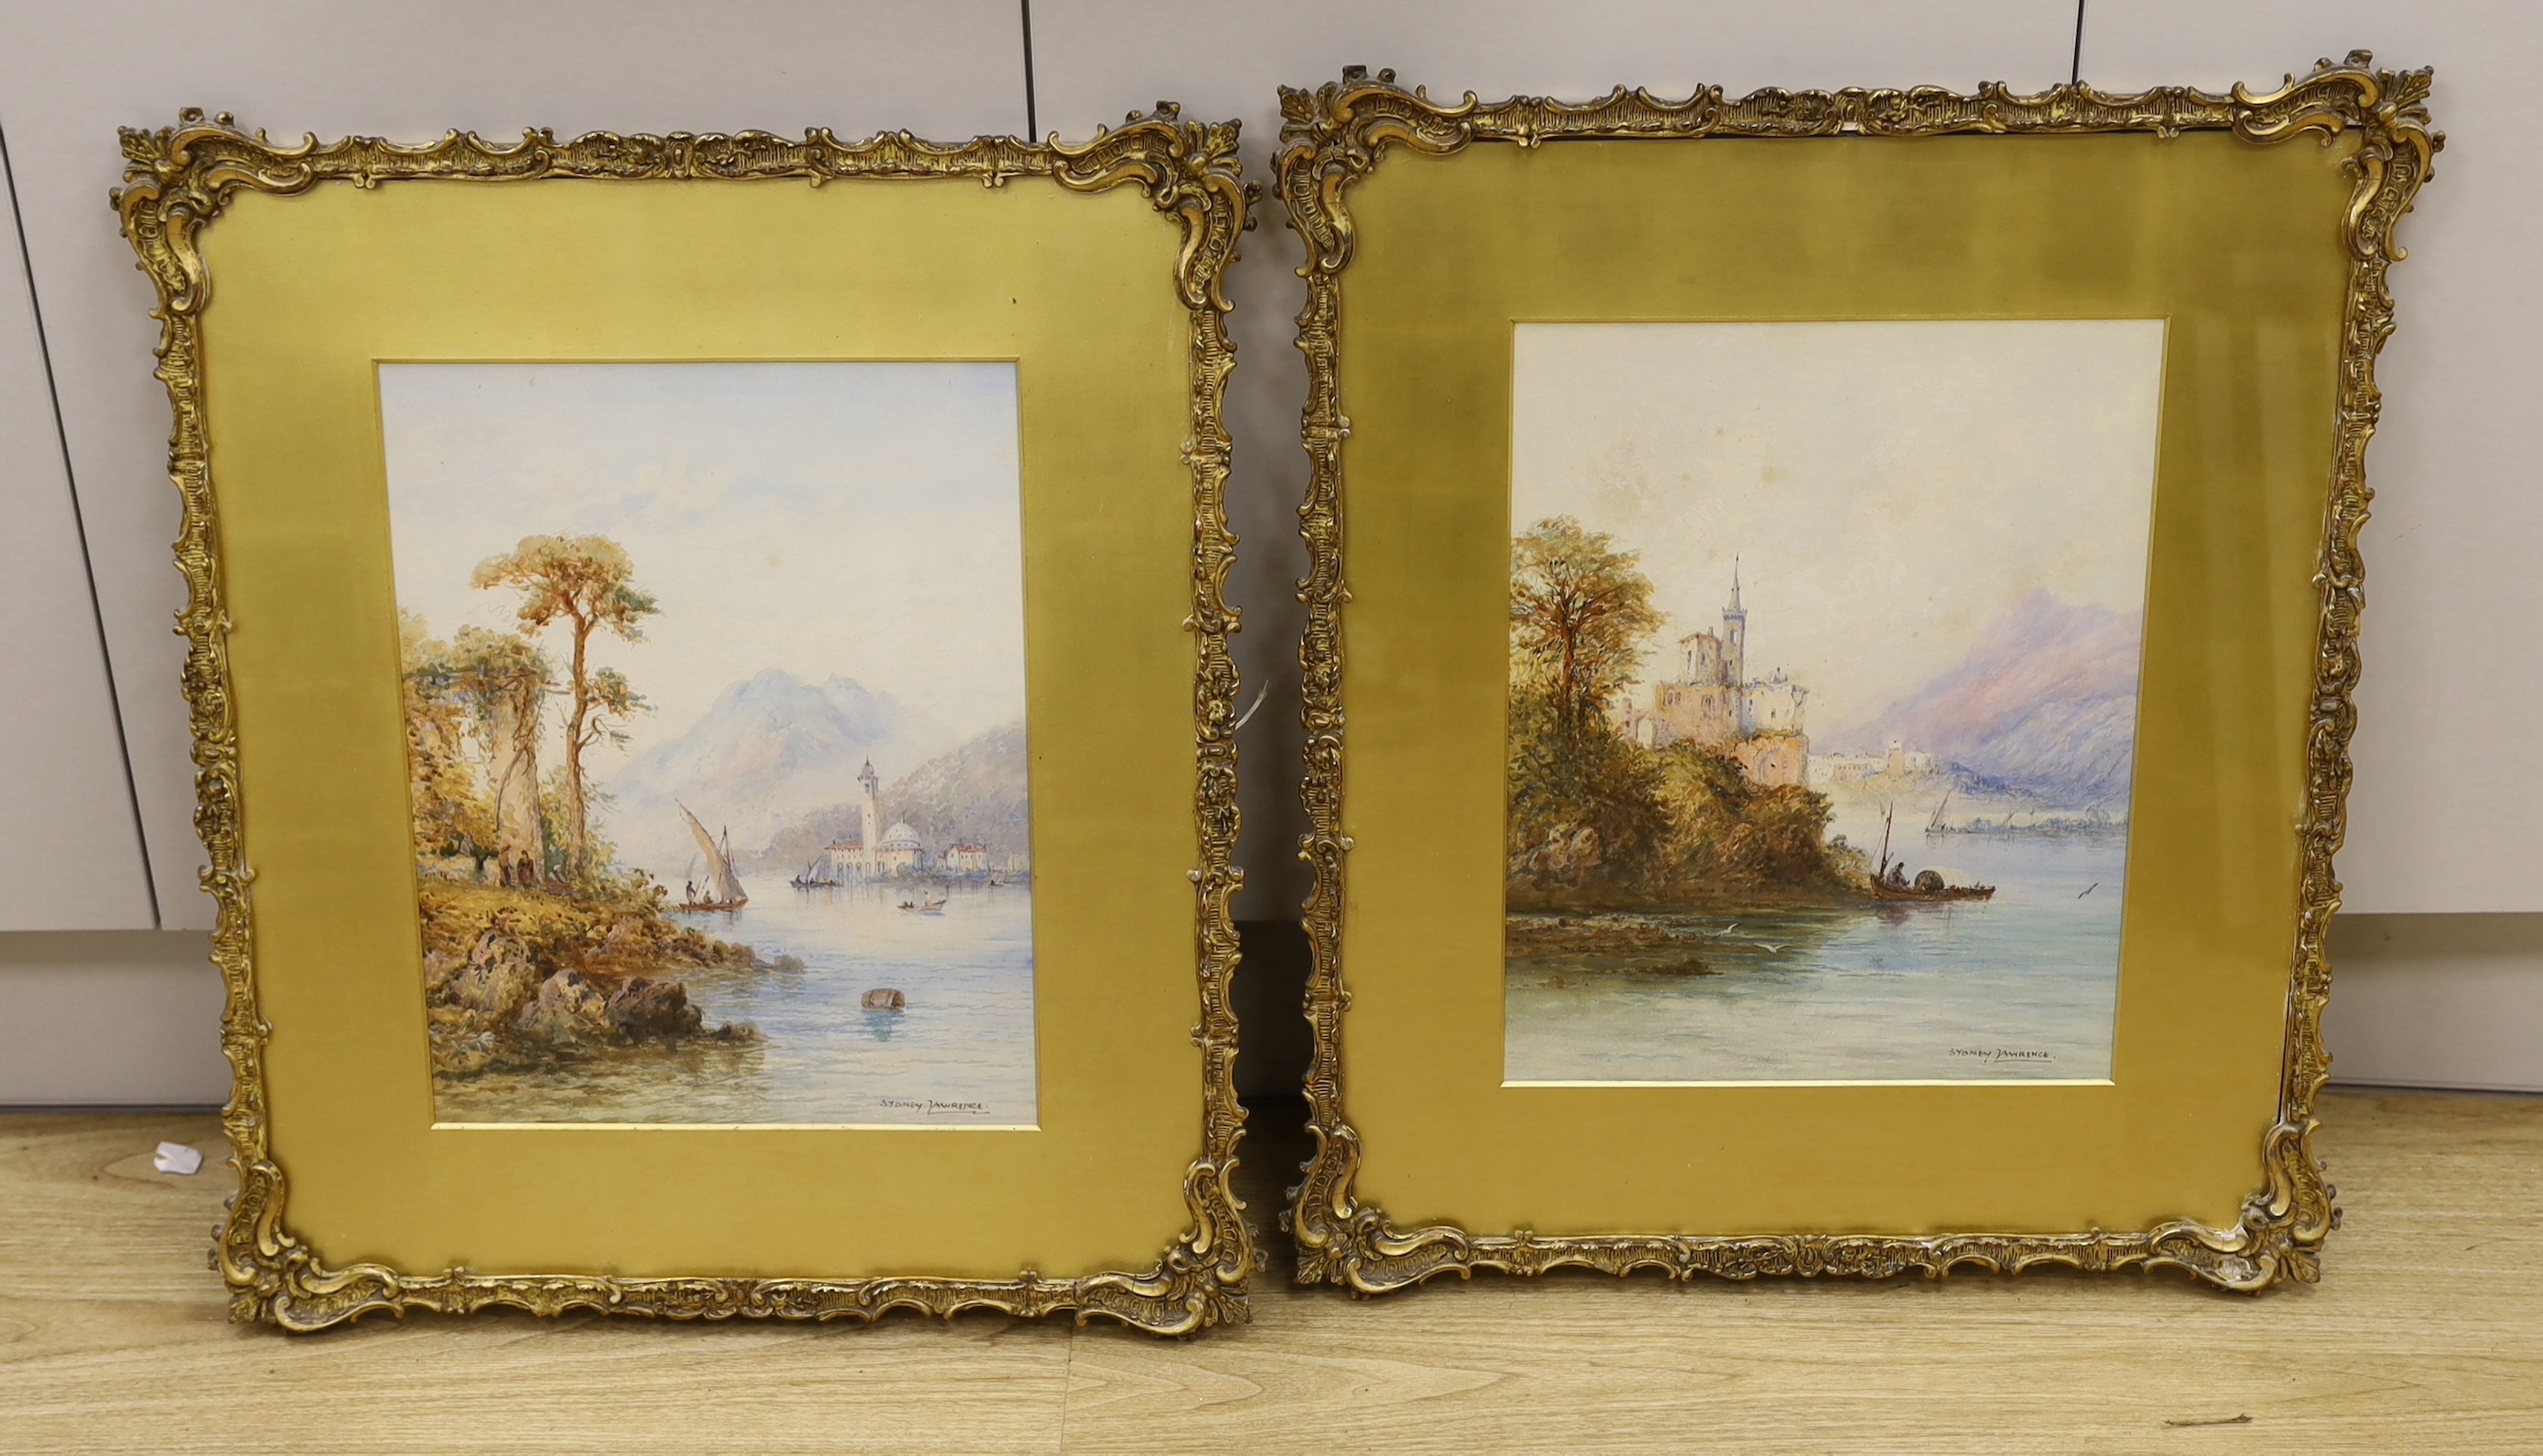 Sydney Lawrence (1858-1940), pair of watercolours, Italian mountainous lakeside scenes, signed, 40 x 31cm